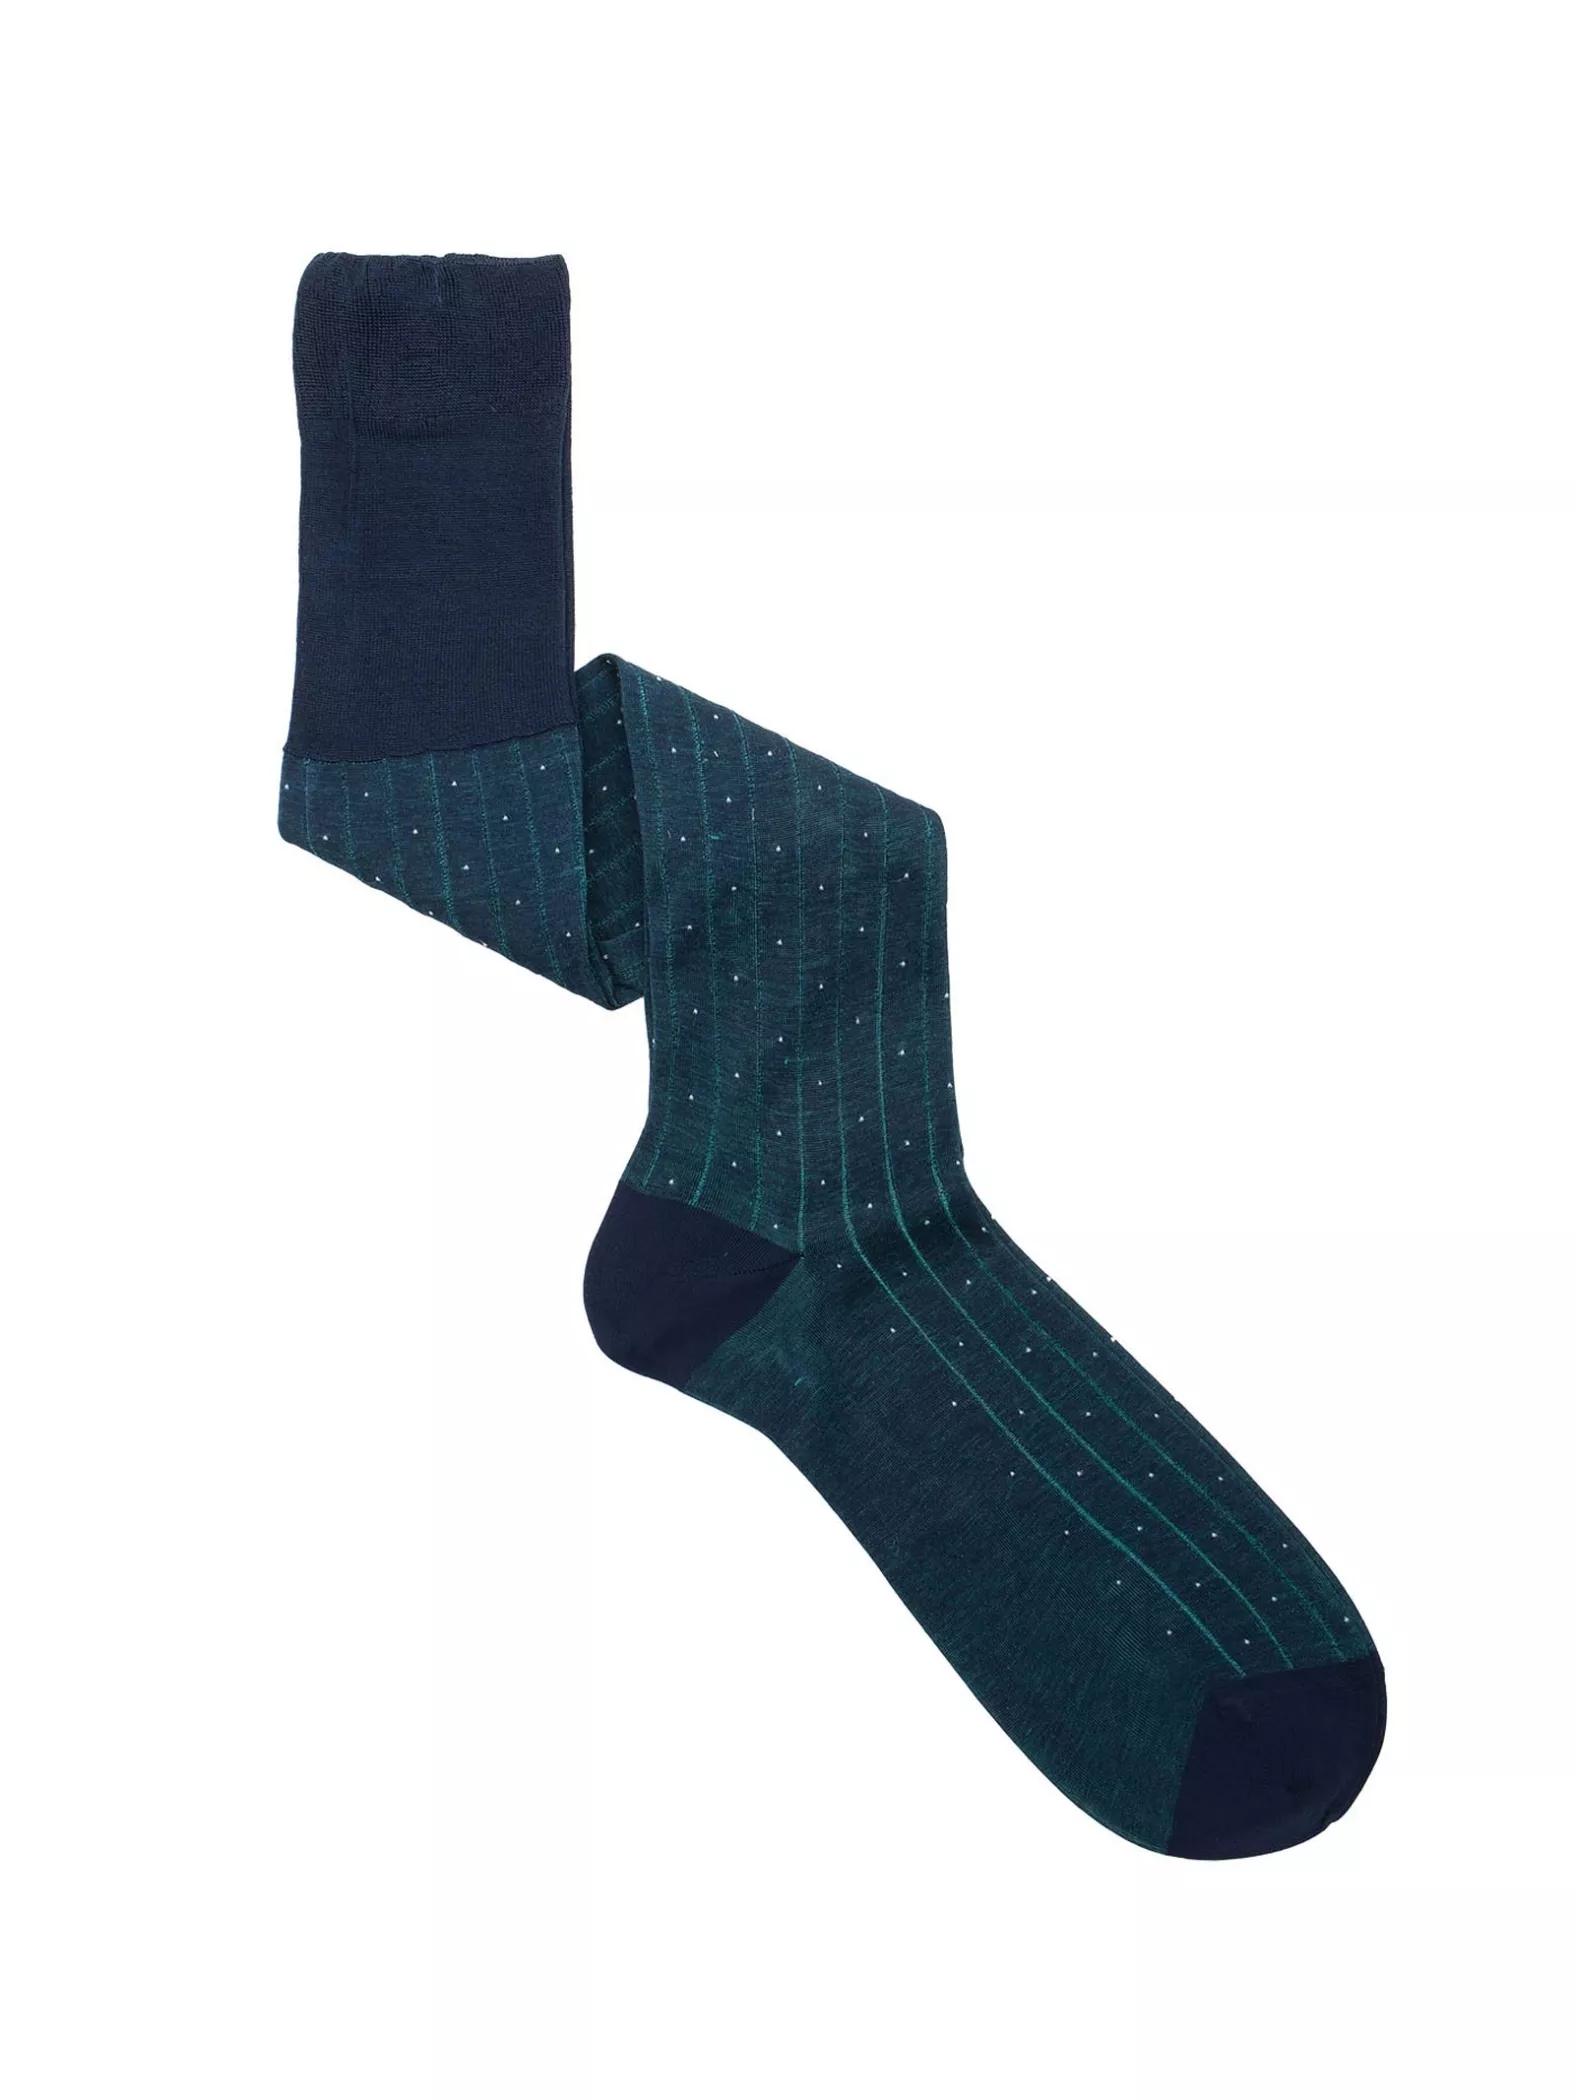 Men's knee-high Socks Pincushion pattern with English cuff